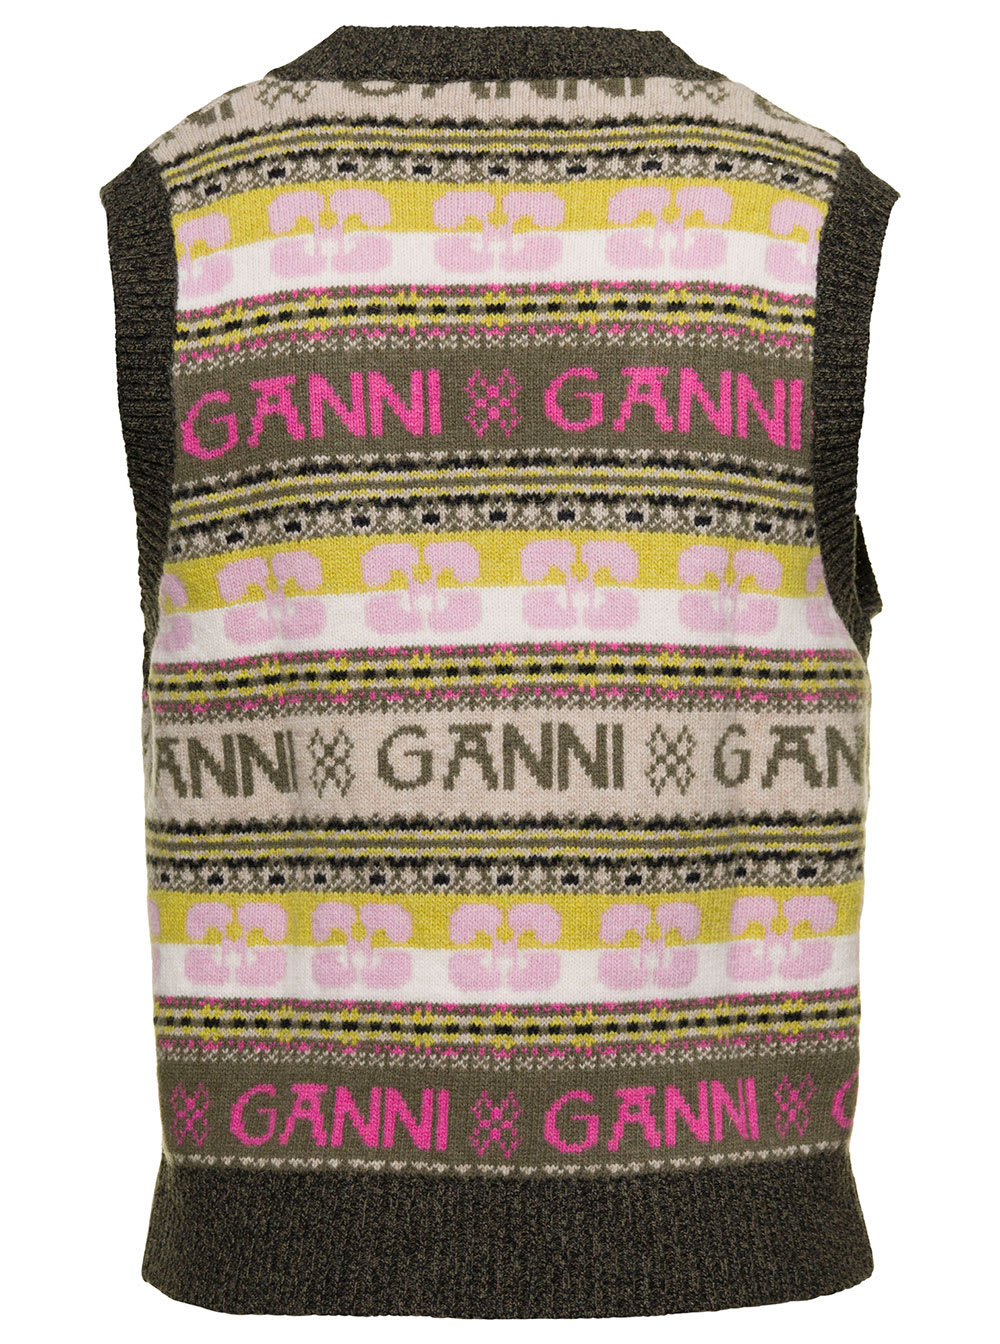 Ganni Argyle Organic Cotton Knitted Vest - Blue